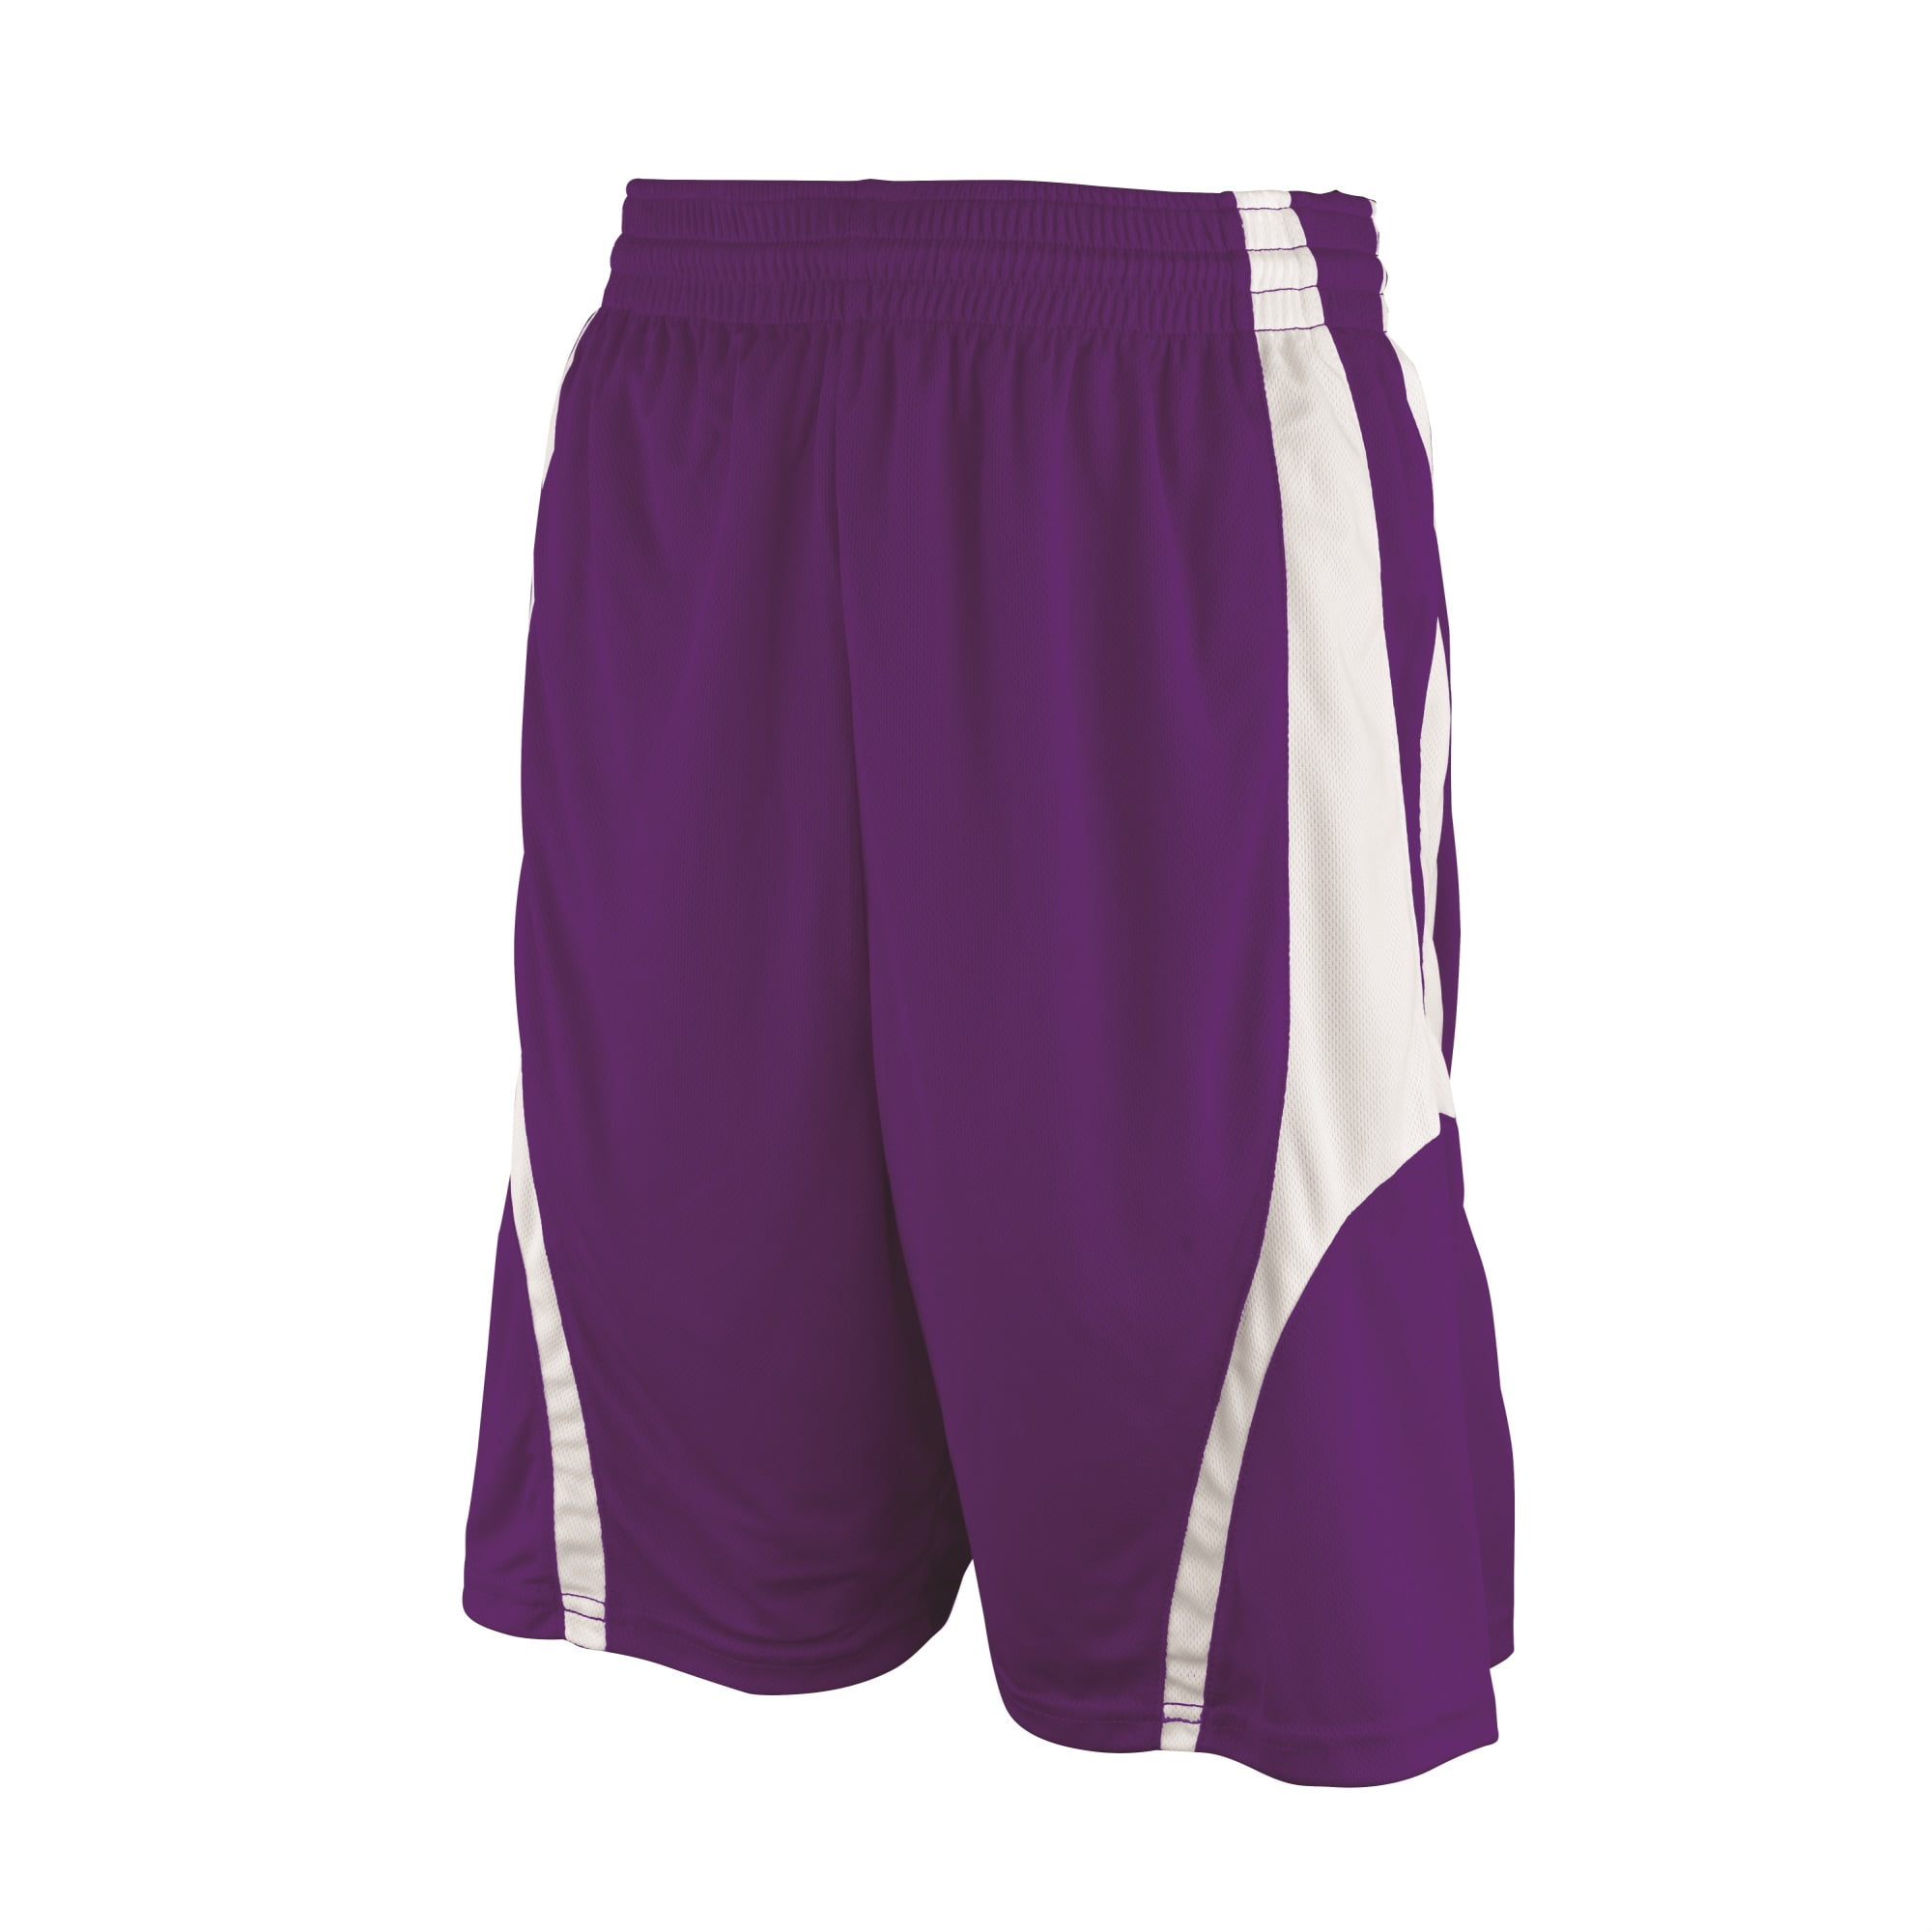 Reebok NBA Basketball Men's Utah Jazz Lightweight Mesh Basketball Shorts, Purple